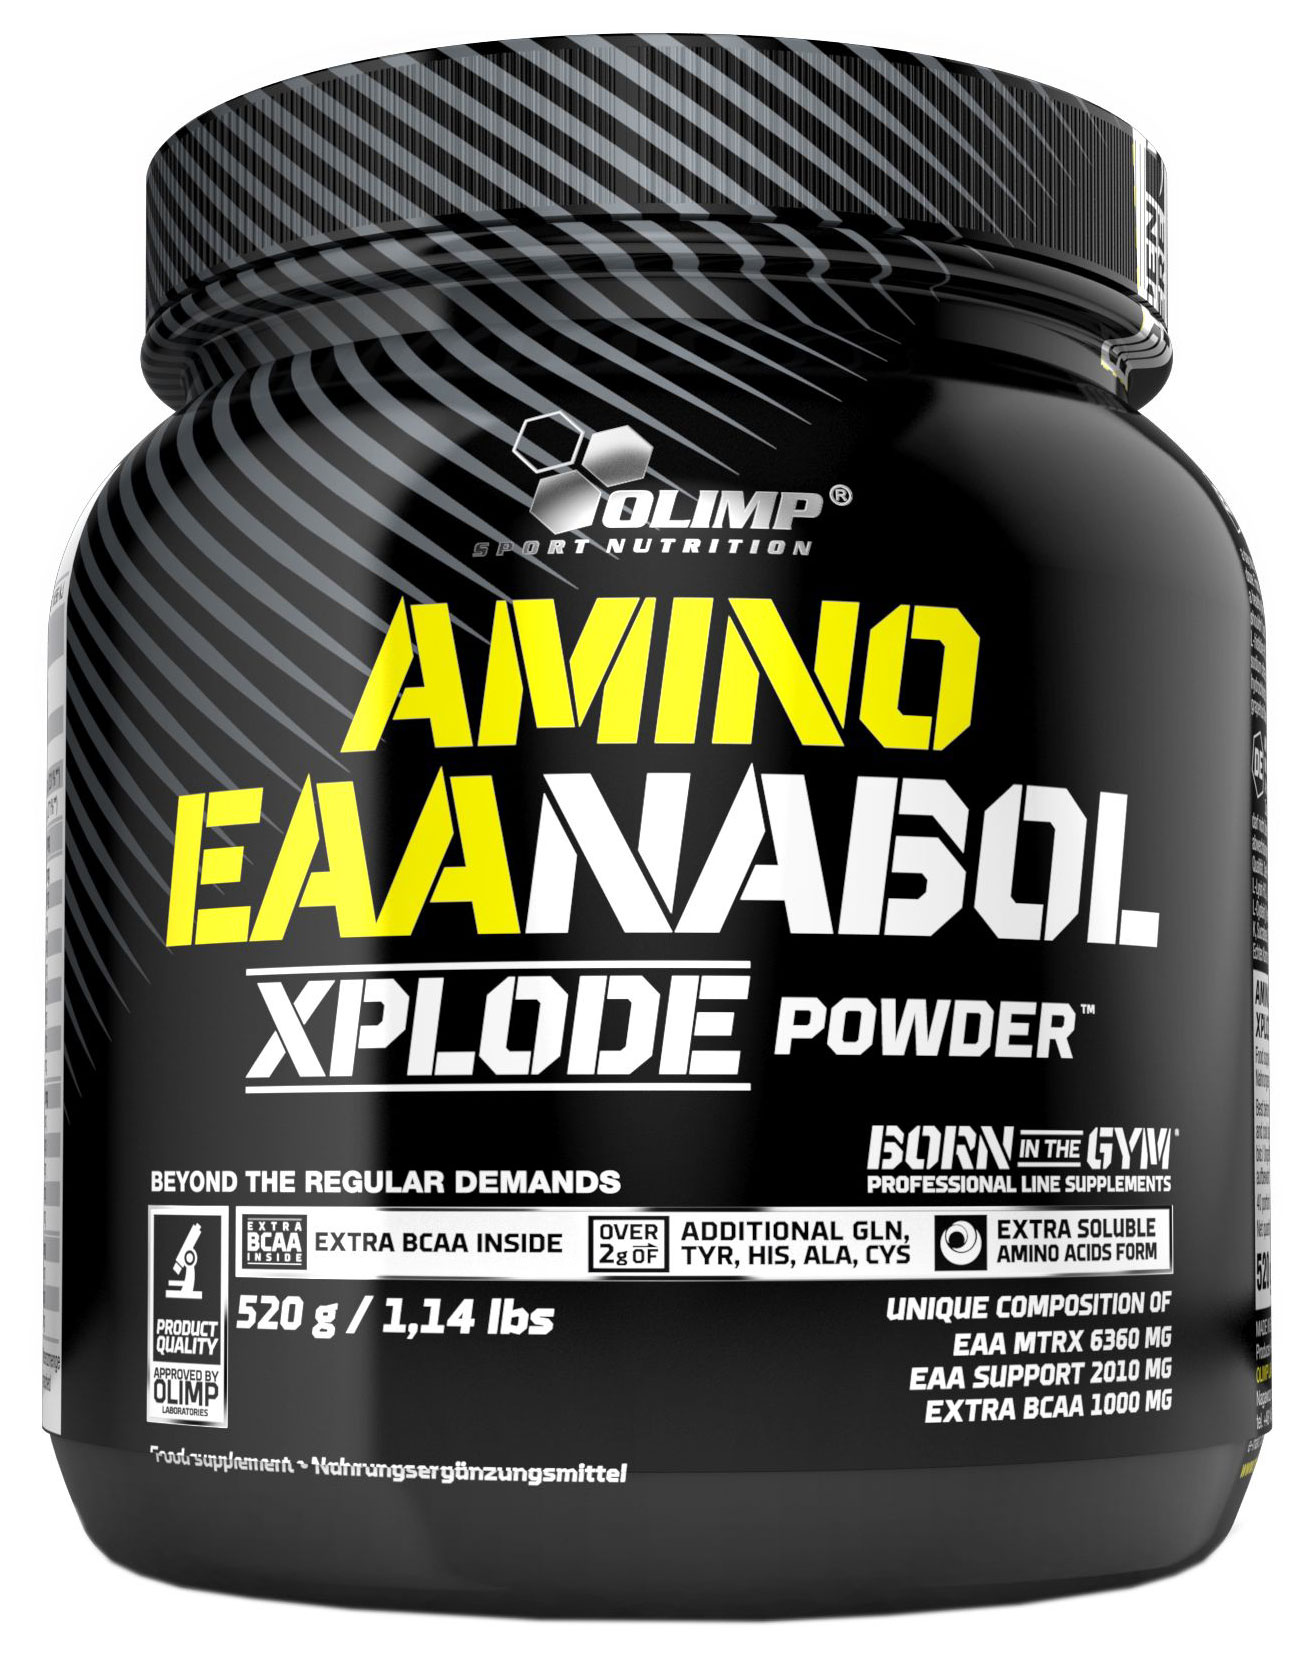 Amino EAAnabol Xplode Powder Olimp, 520 г, fruit punch